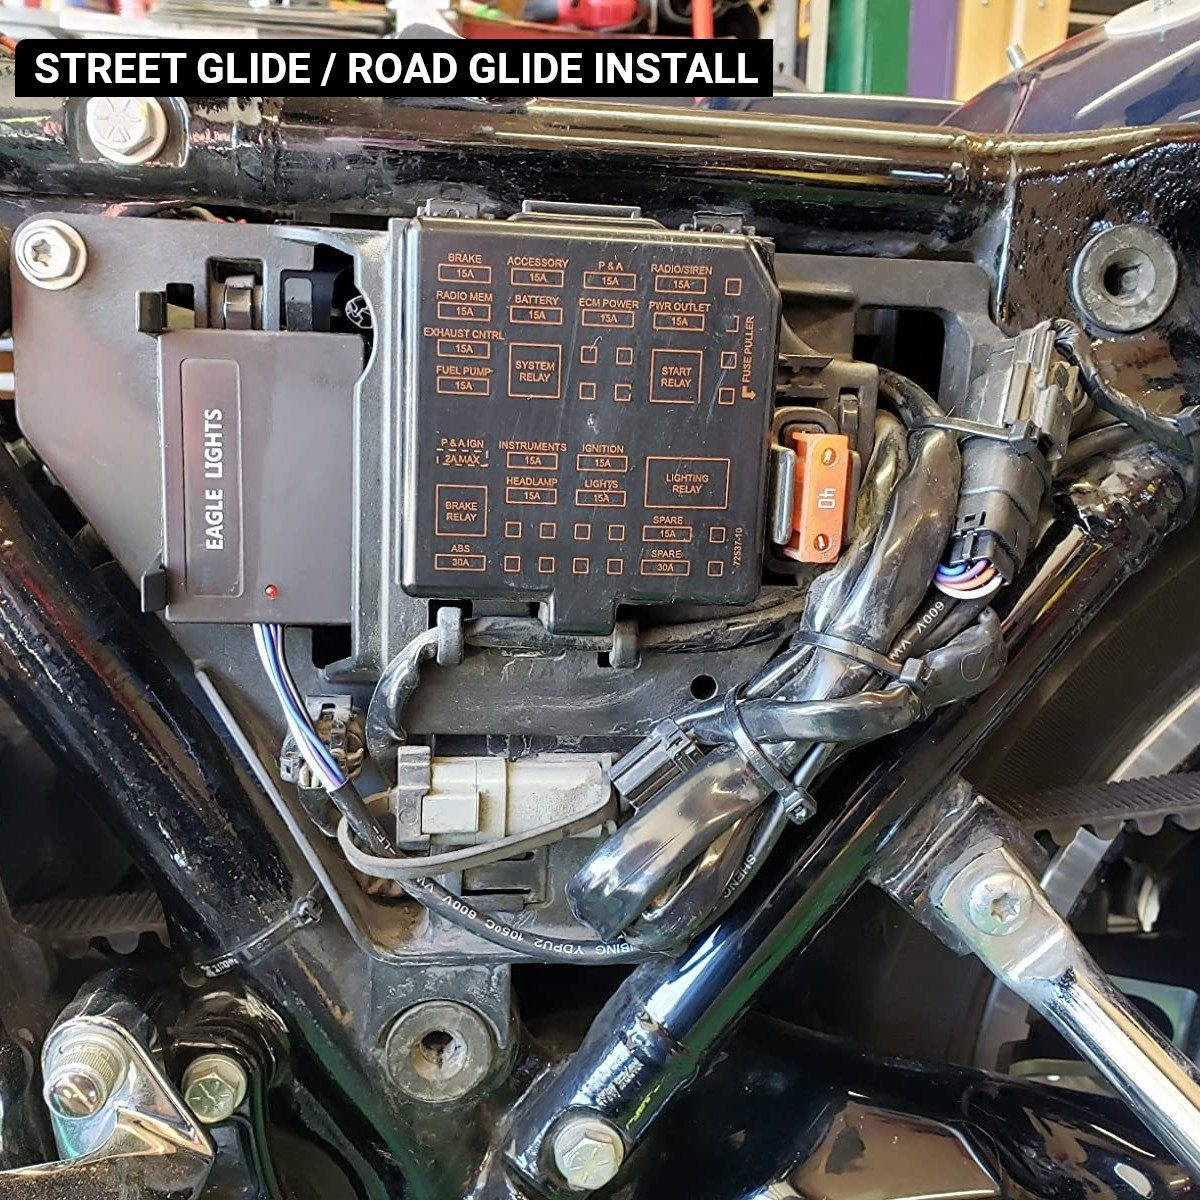 Harley LED turn signal load equalizer - 